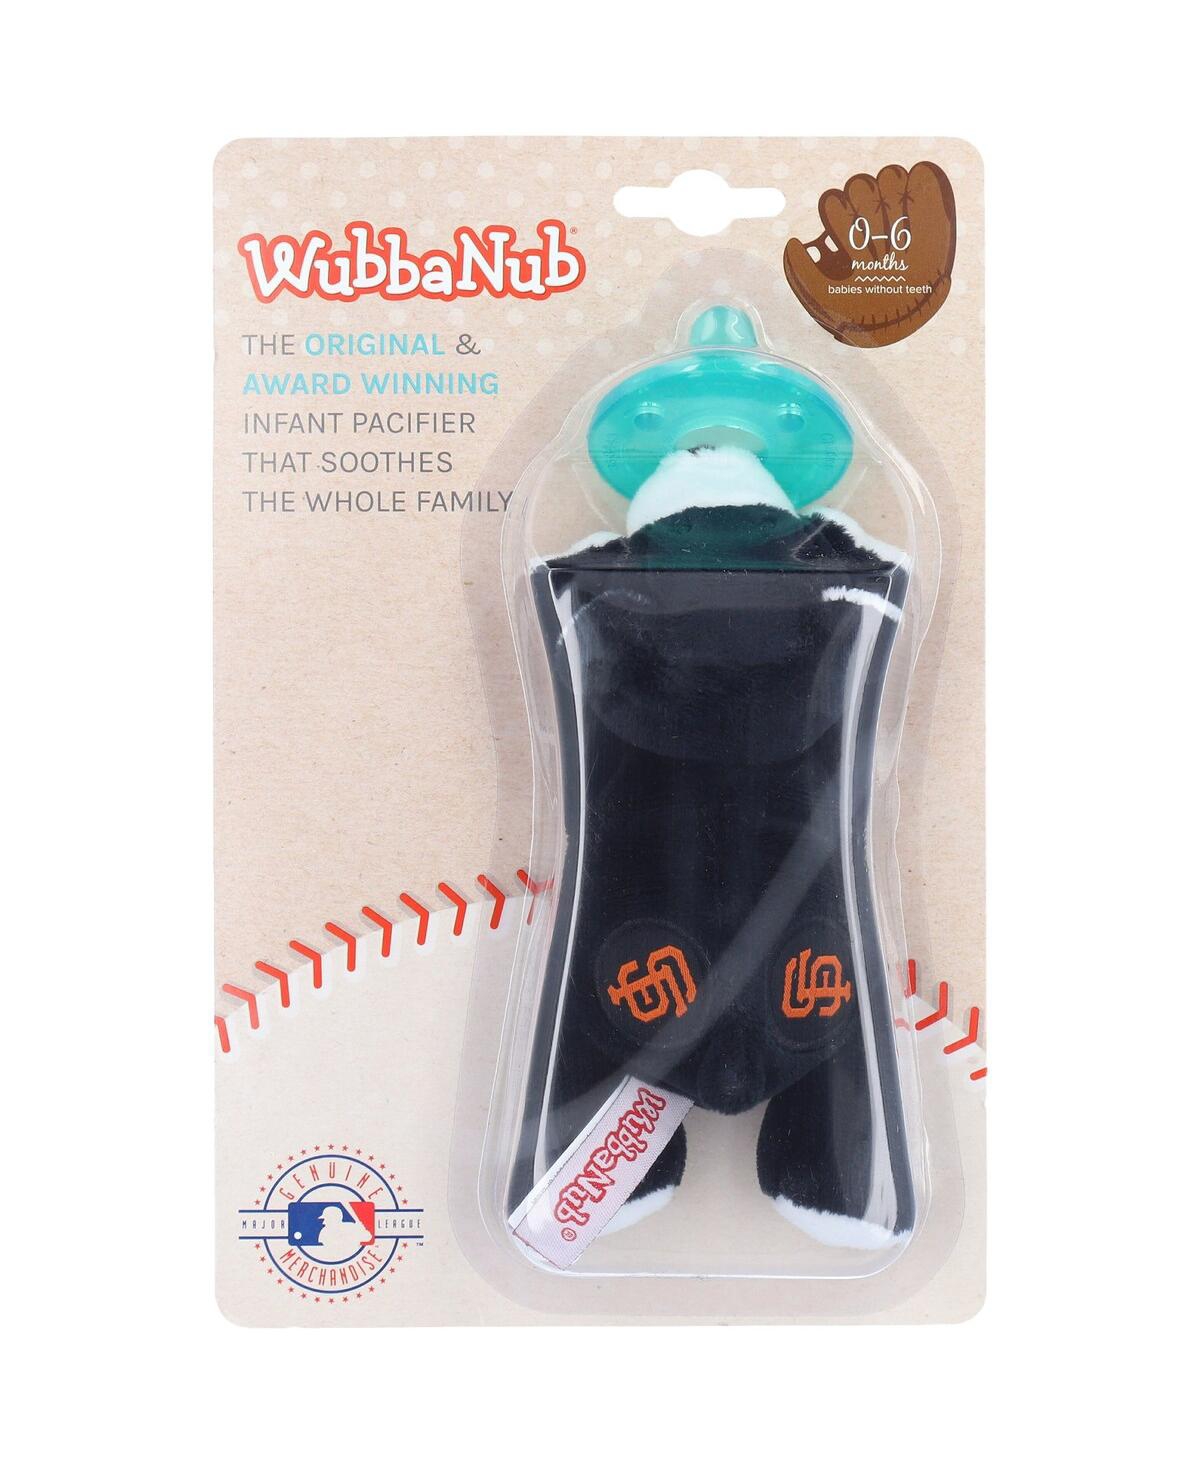 Wubbanub Kids' 0 To 6m Infant Pacifier In Black